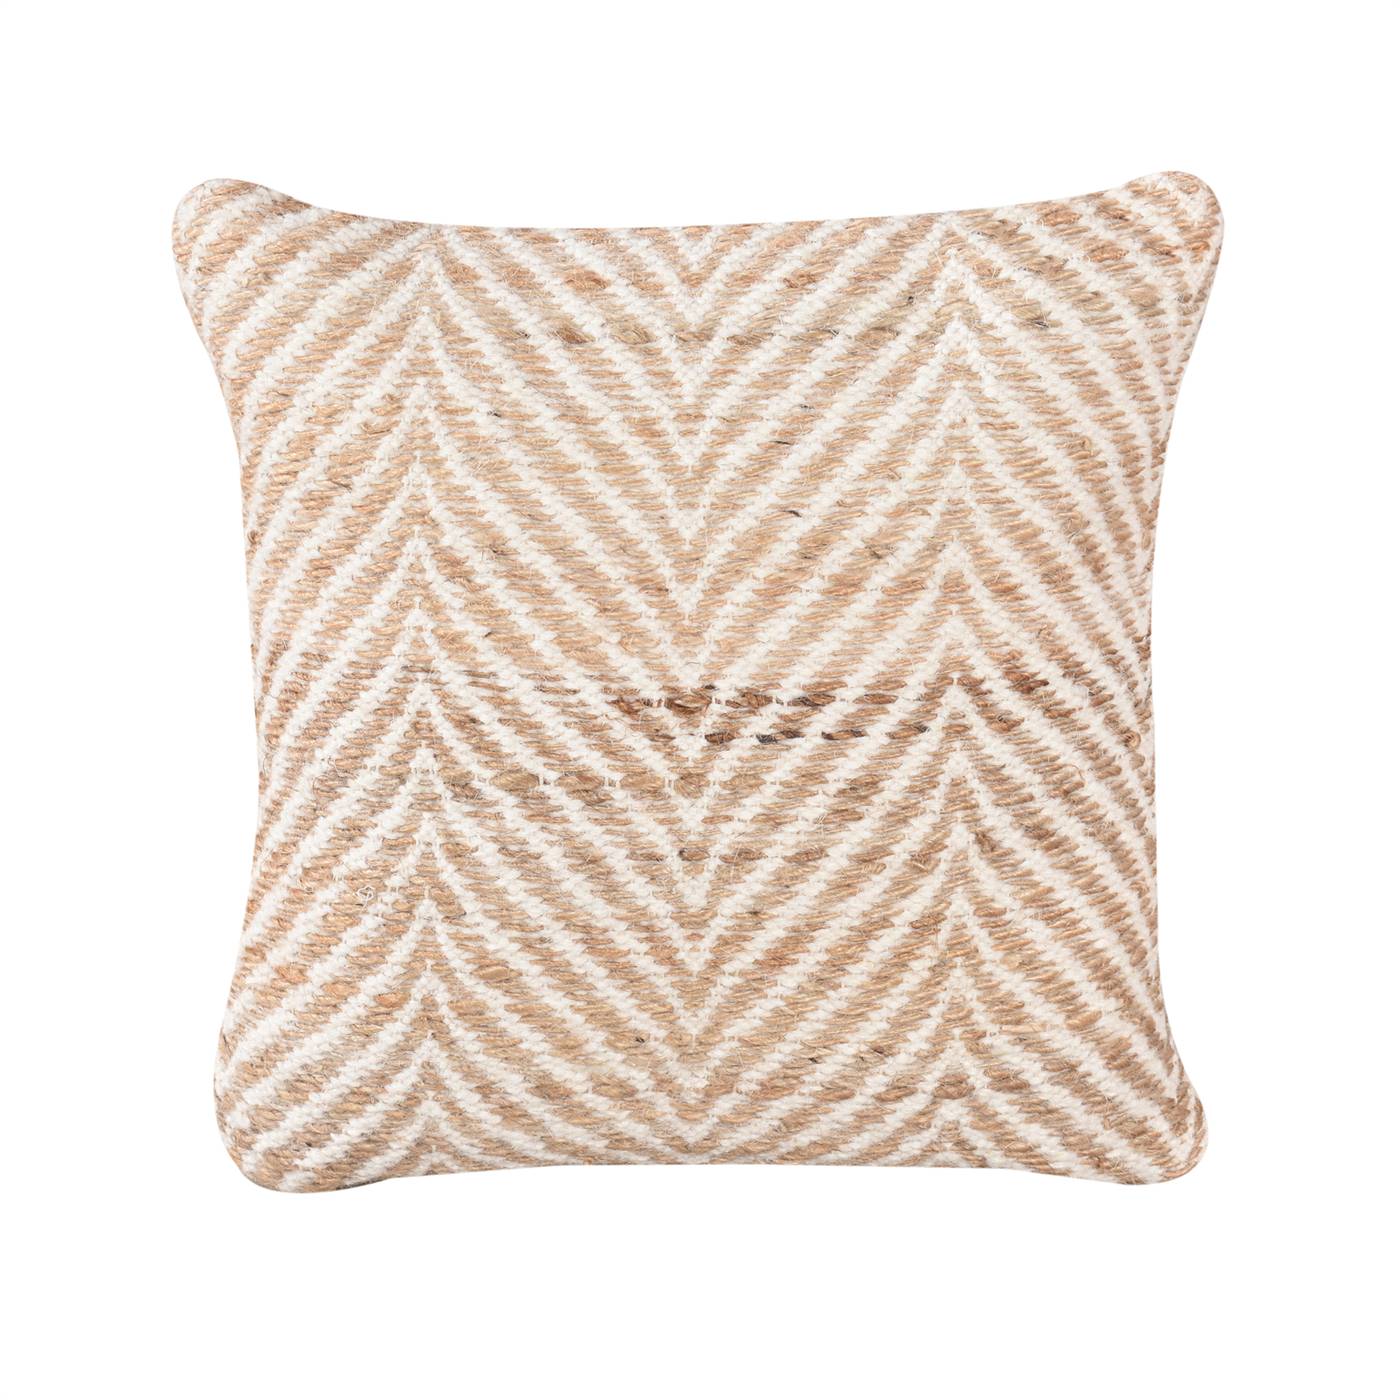 Genil Cushion, 45x45 cm, Natural, Natural White, Jute, Wool, Hand Woven, Pitloom, Flat Weave 